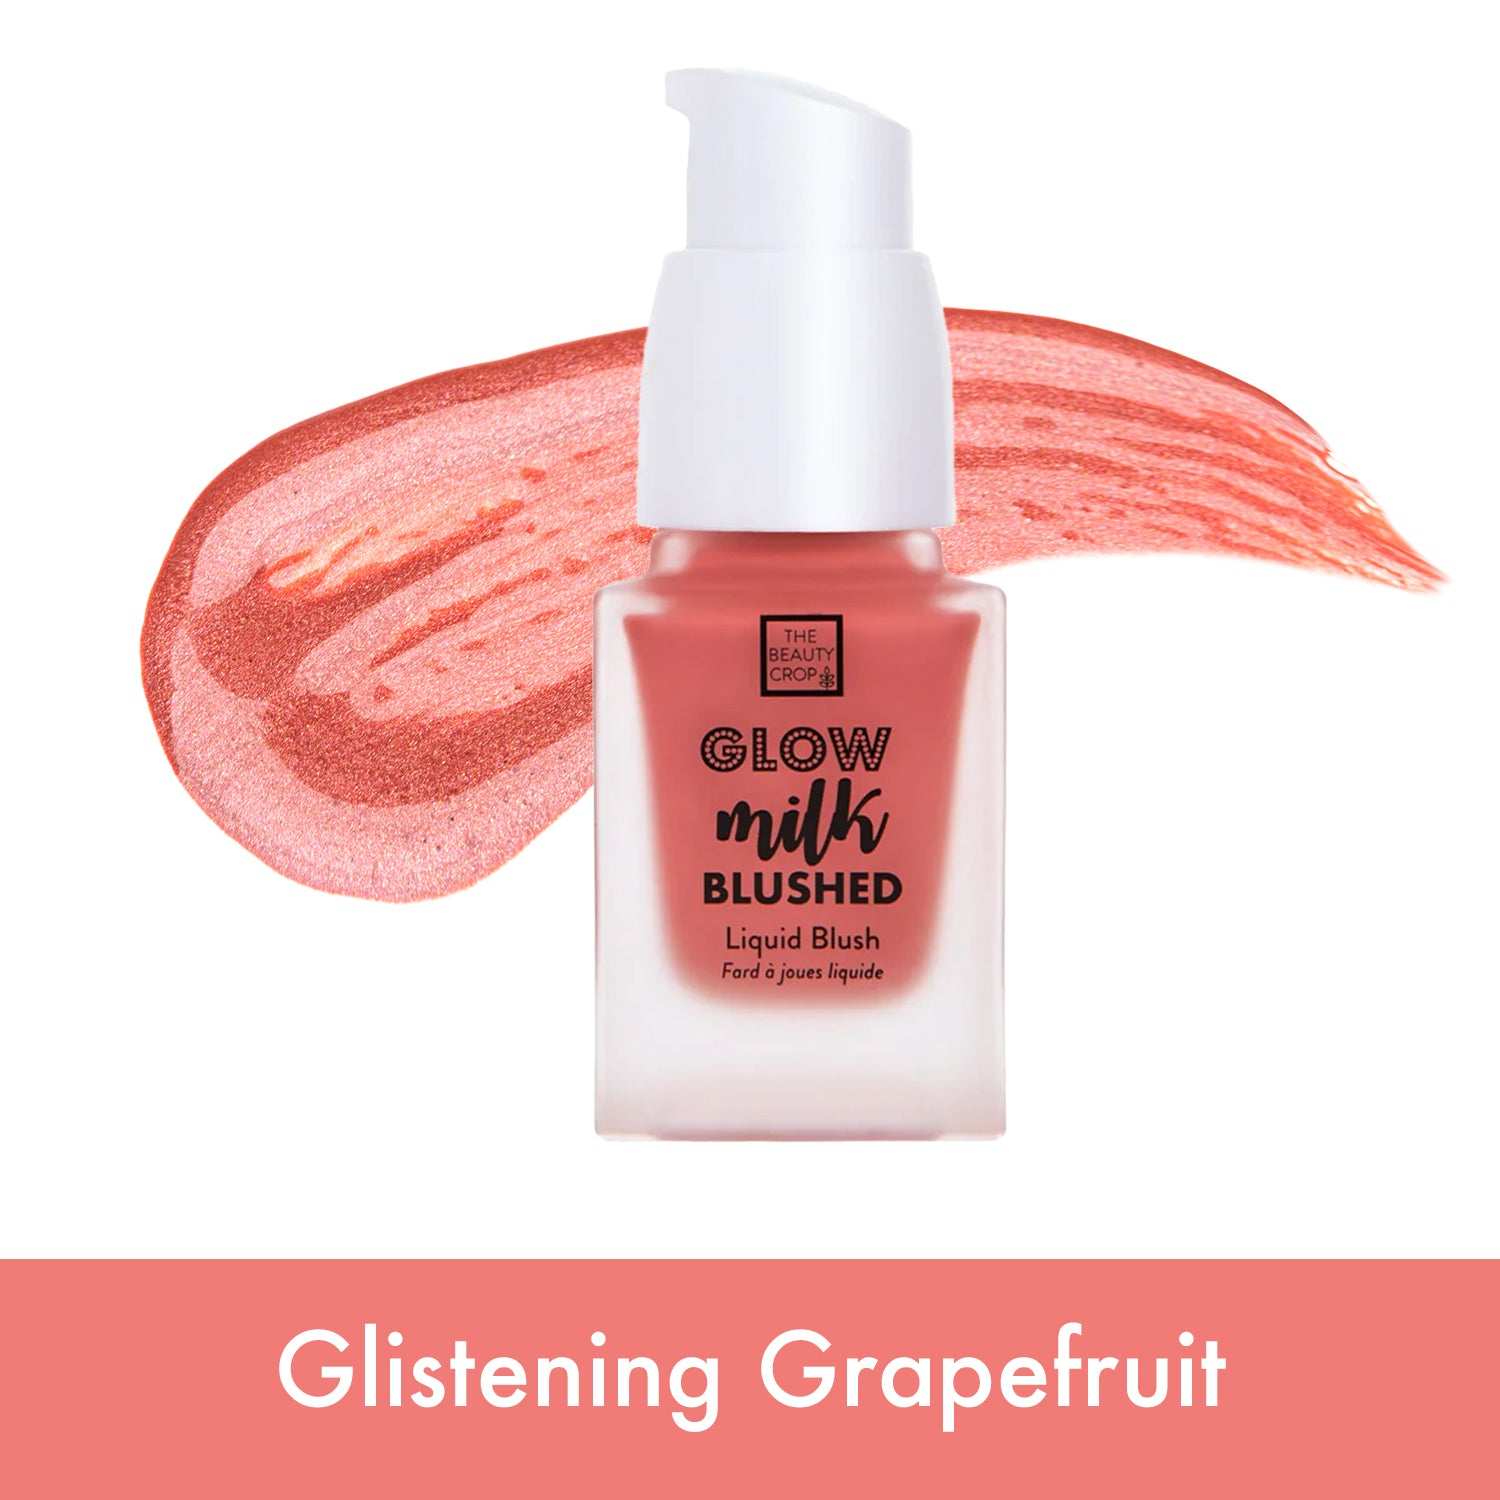 glow milk blushed glisterning grapefruit